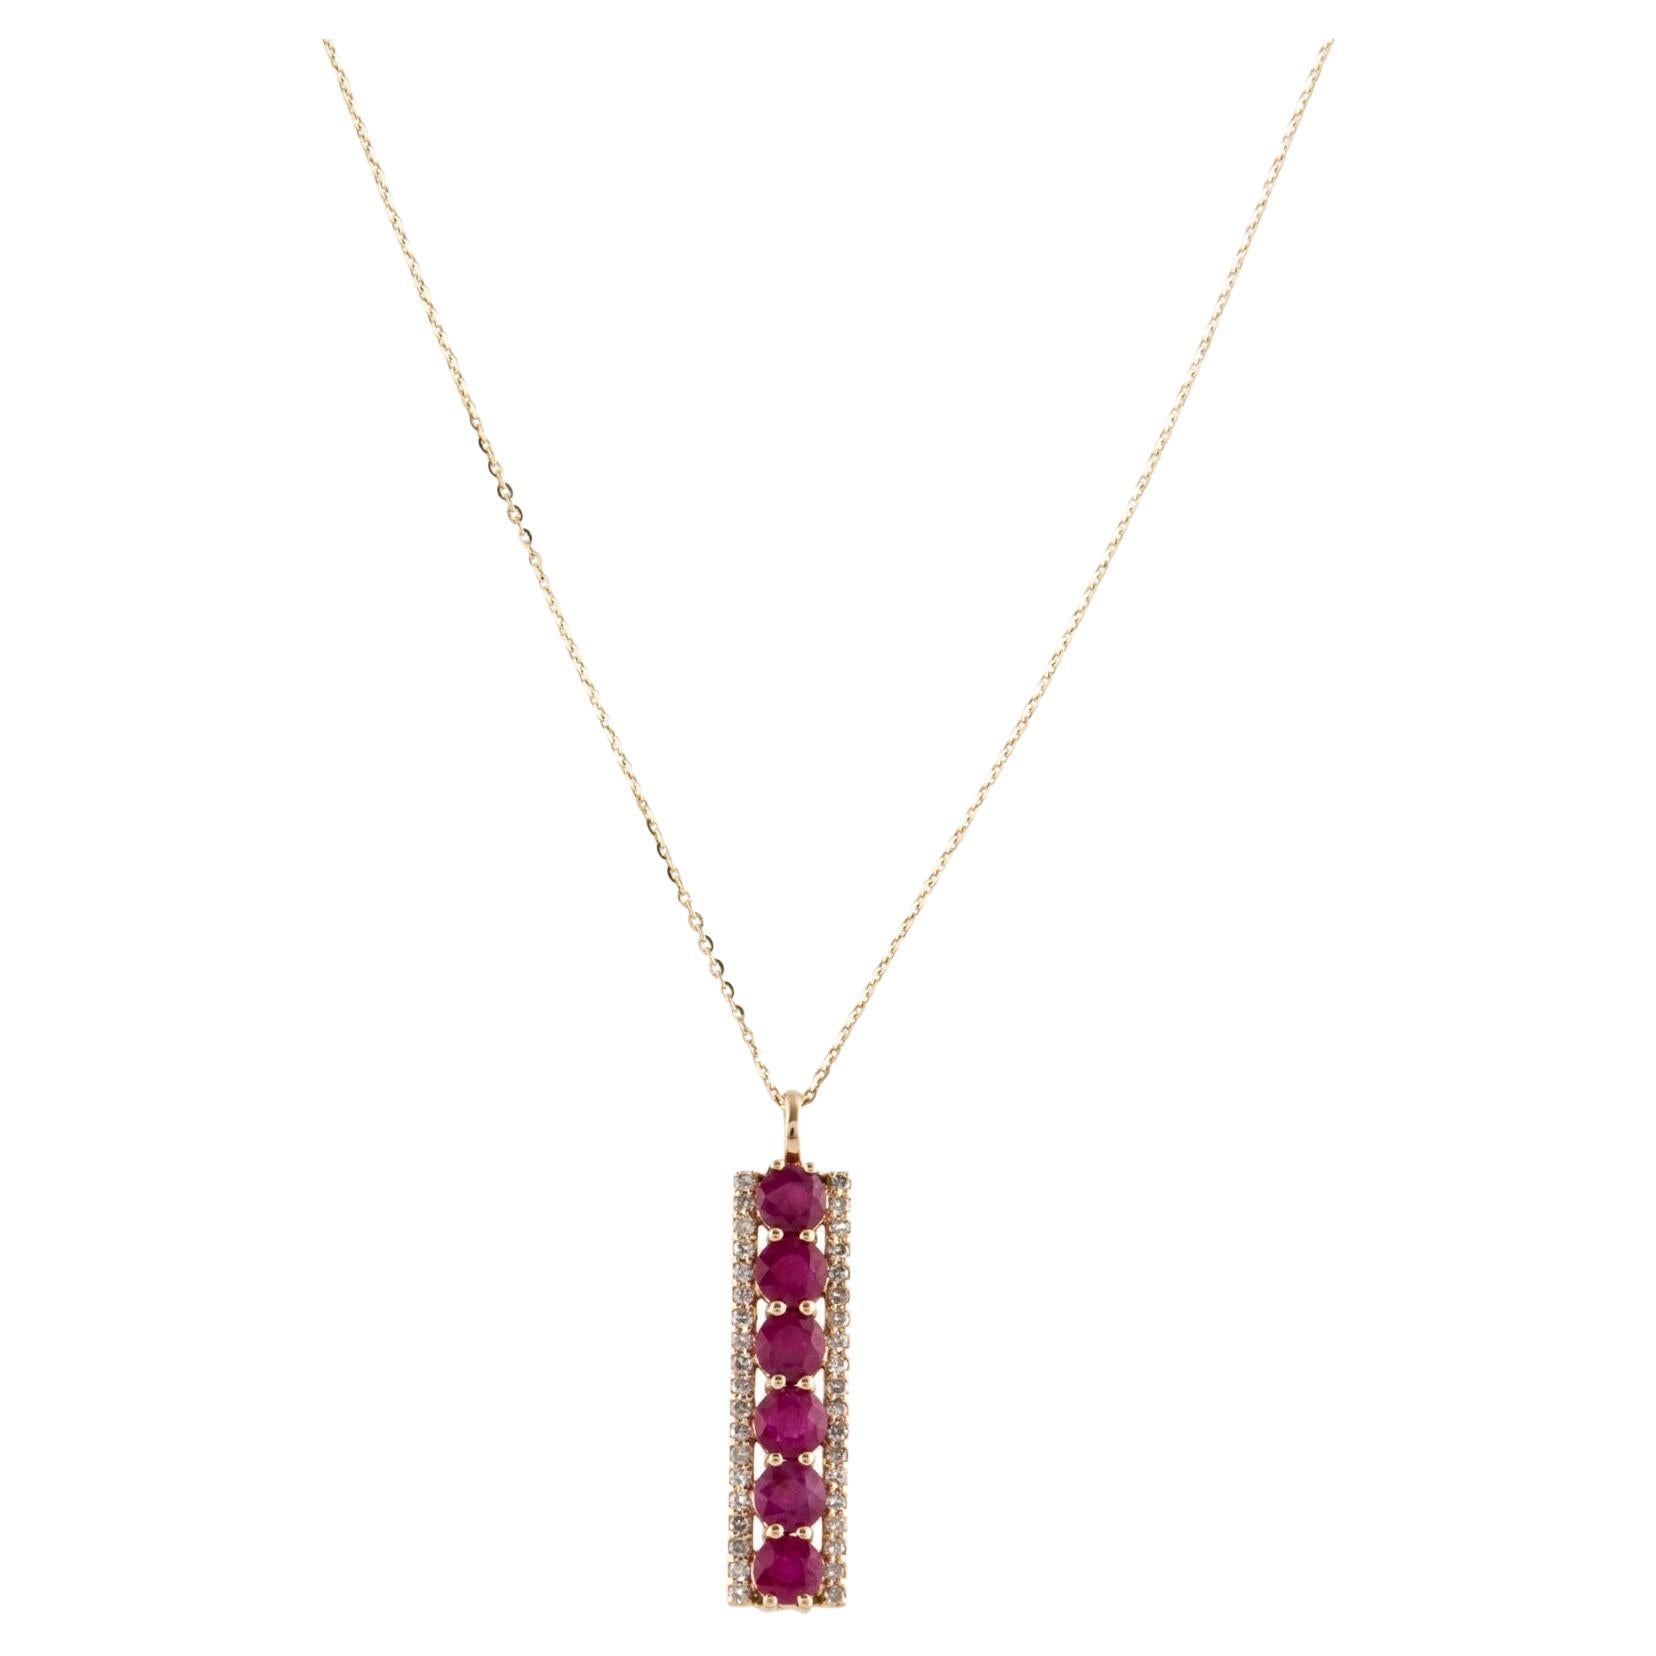 14K Ruby & Diamond Pendant Necklace: Timeless Elegance, Luxury Statement Jewelry